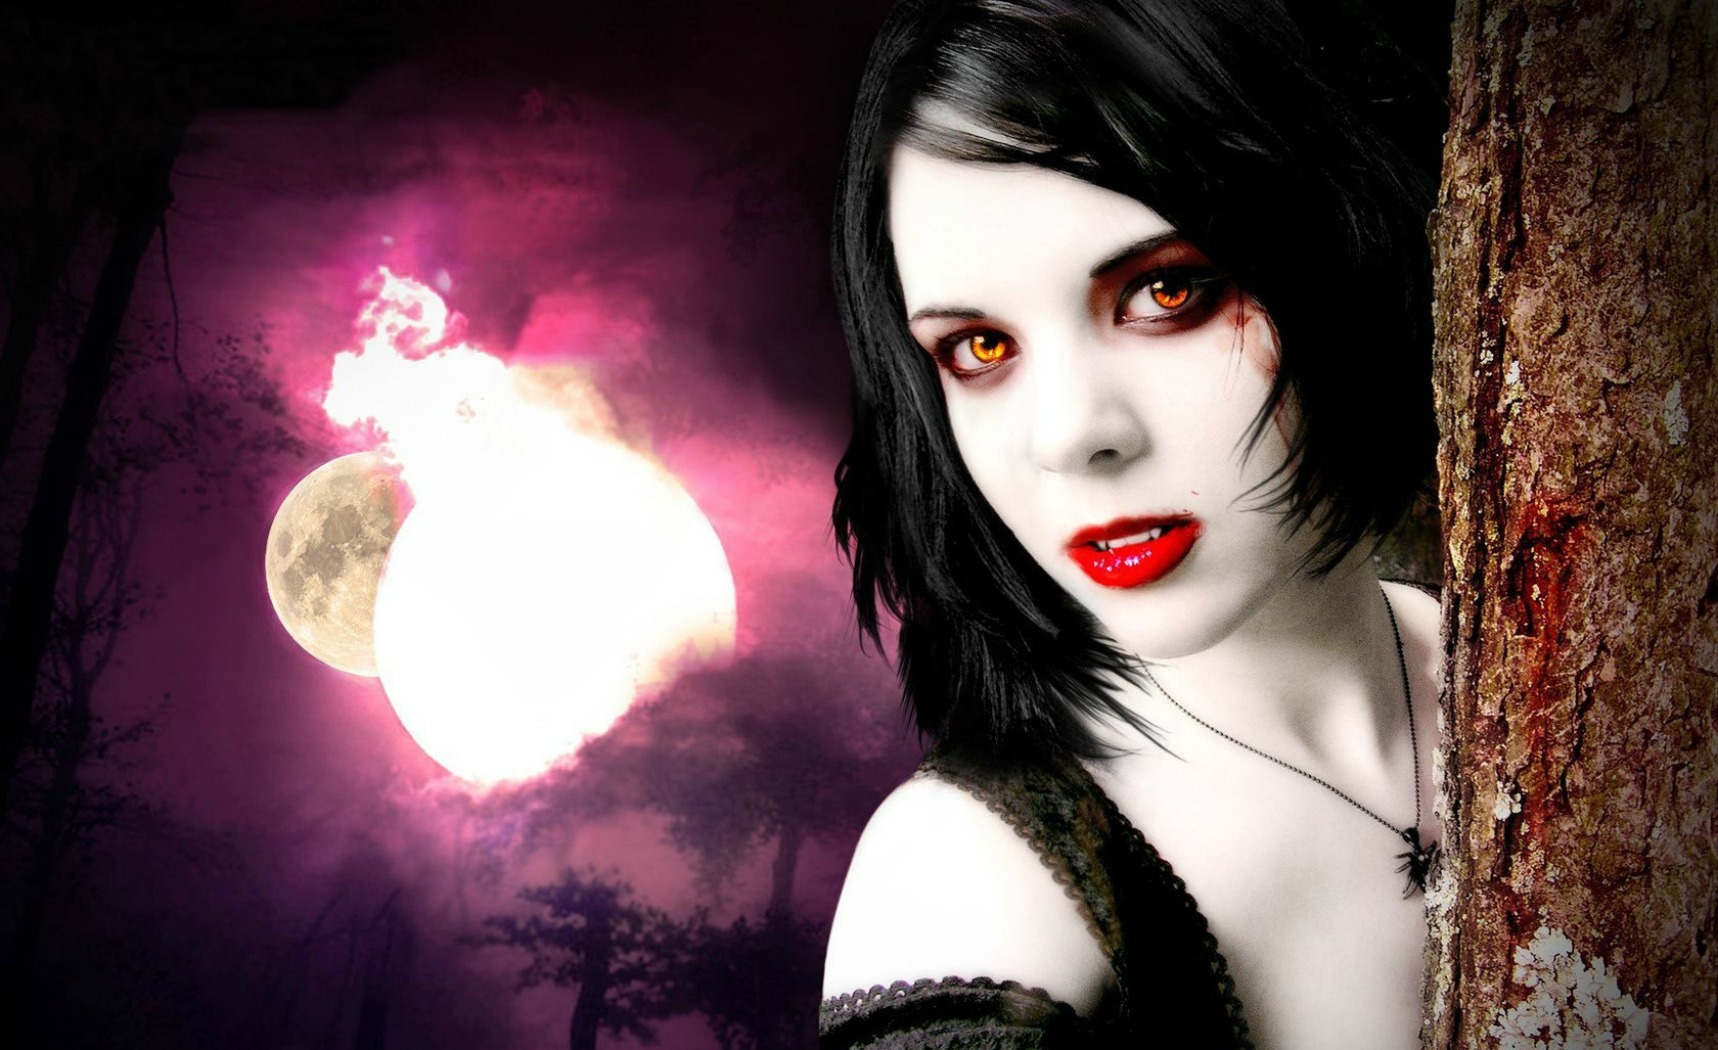 Descarga gratuita de fondo de pantalla para móvil de Vampiro, Fantasía.